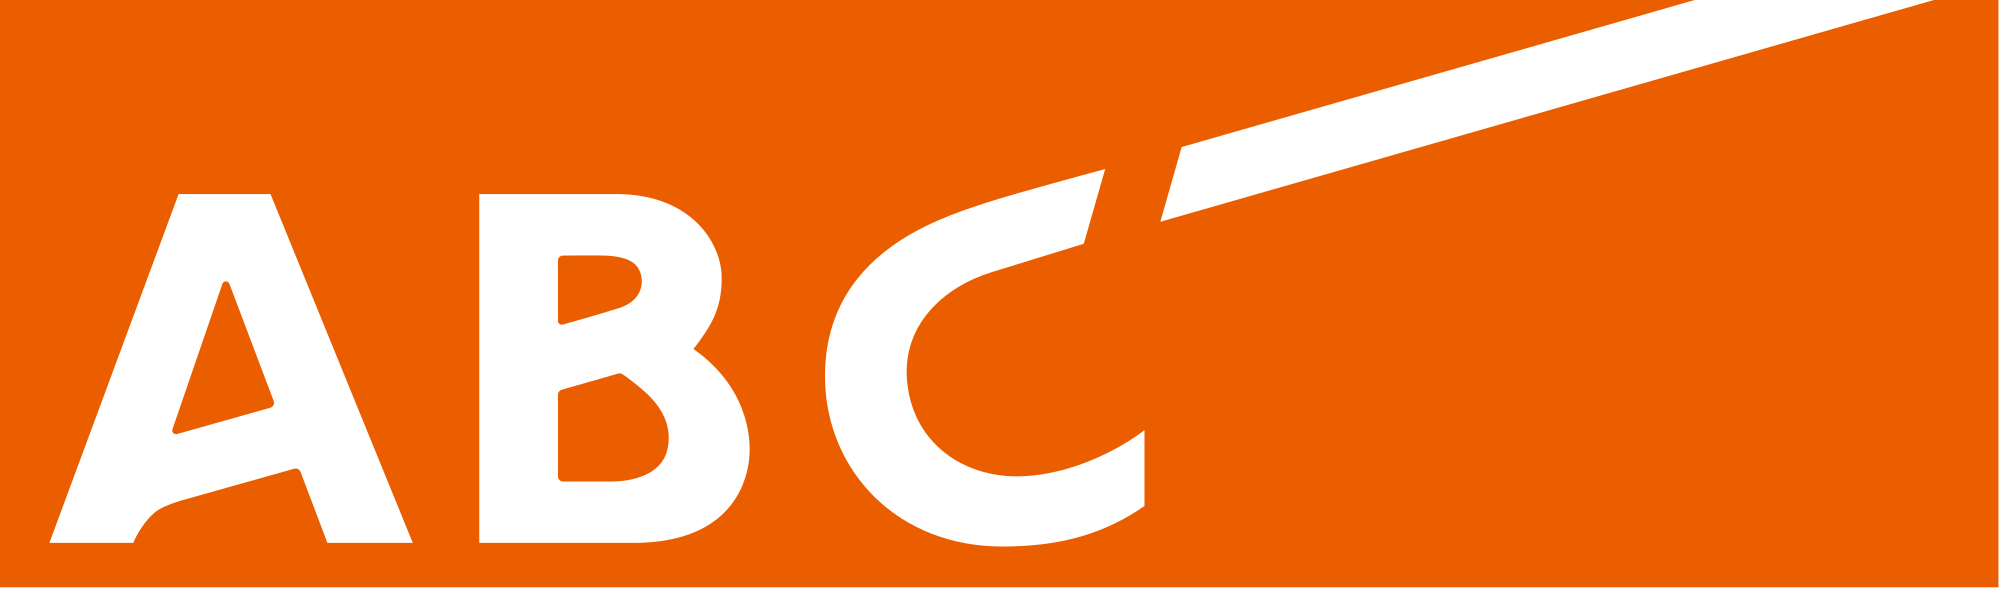 ABC TV - network